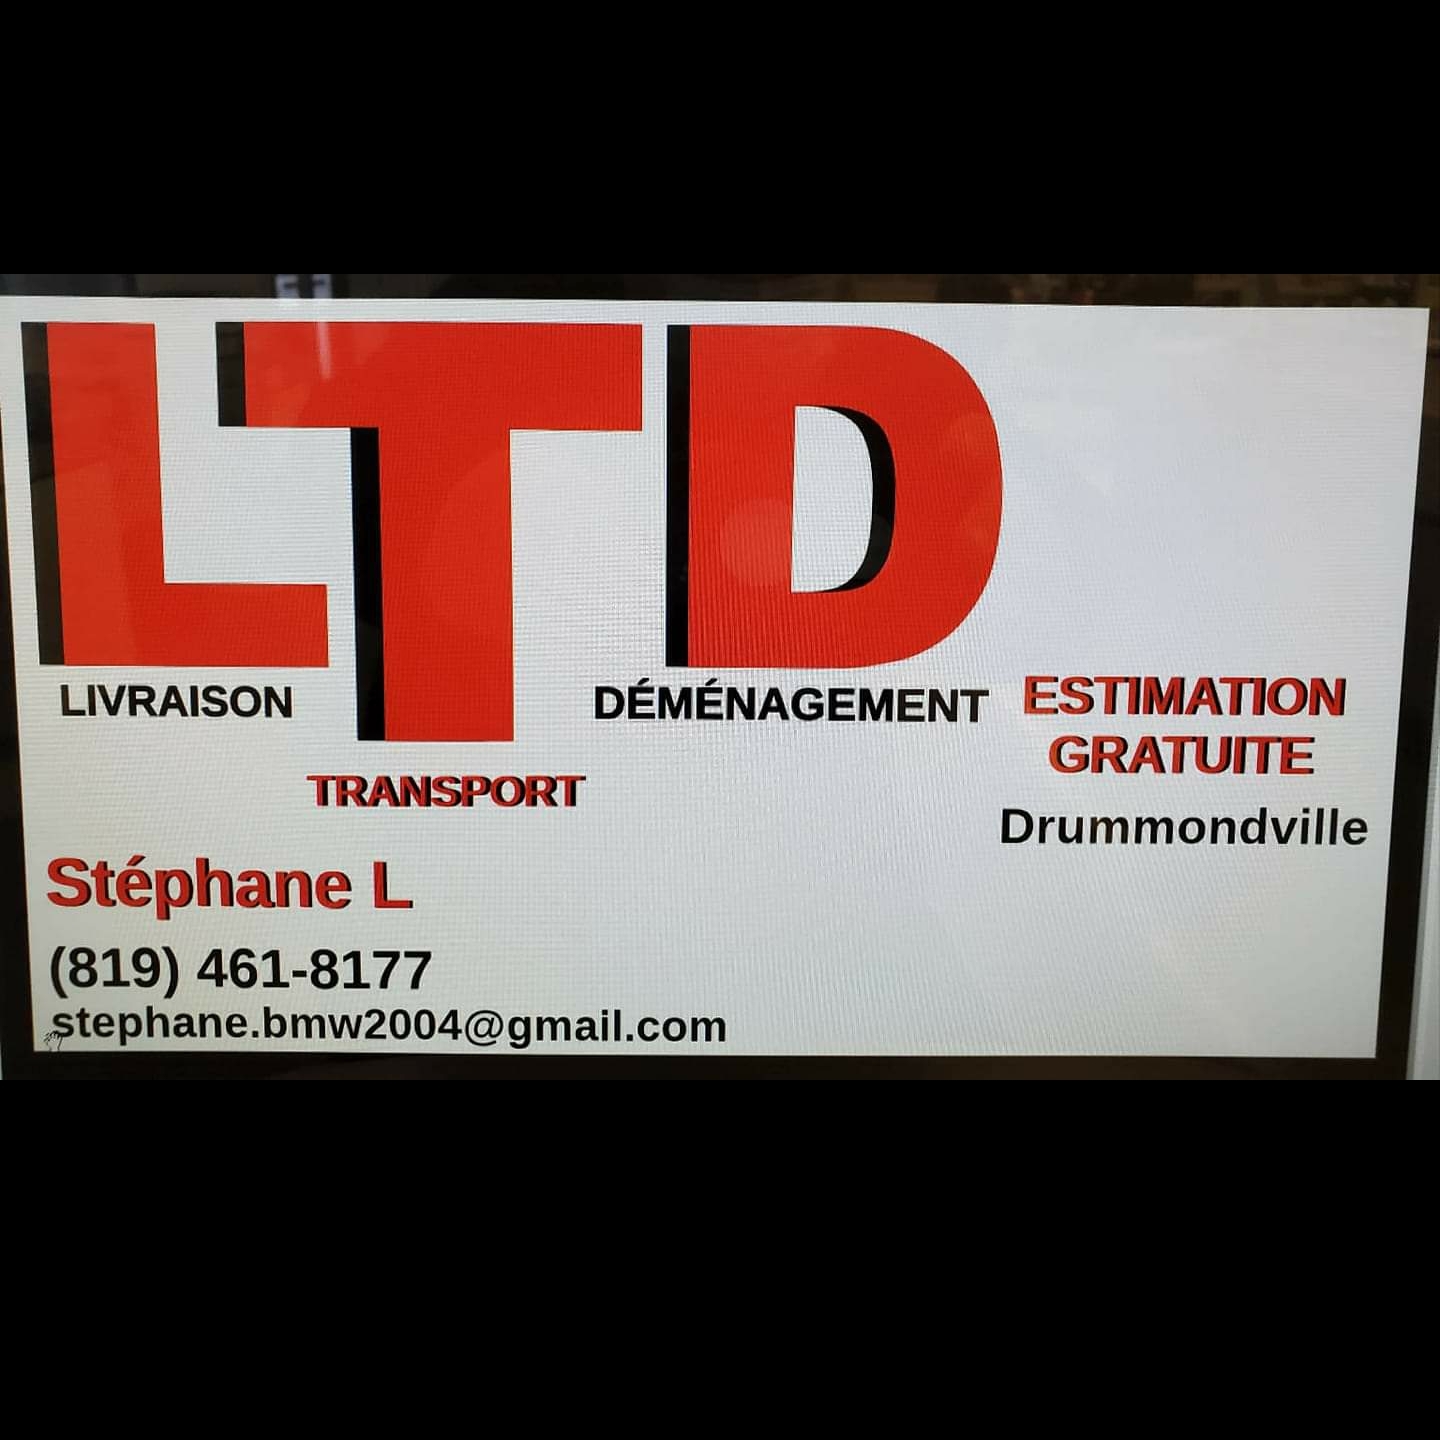 Stephane Lanteigne LTD Livraison Transport Demenagement Logo